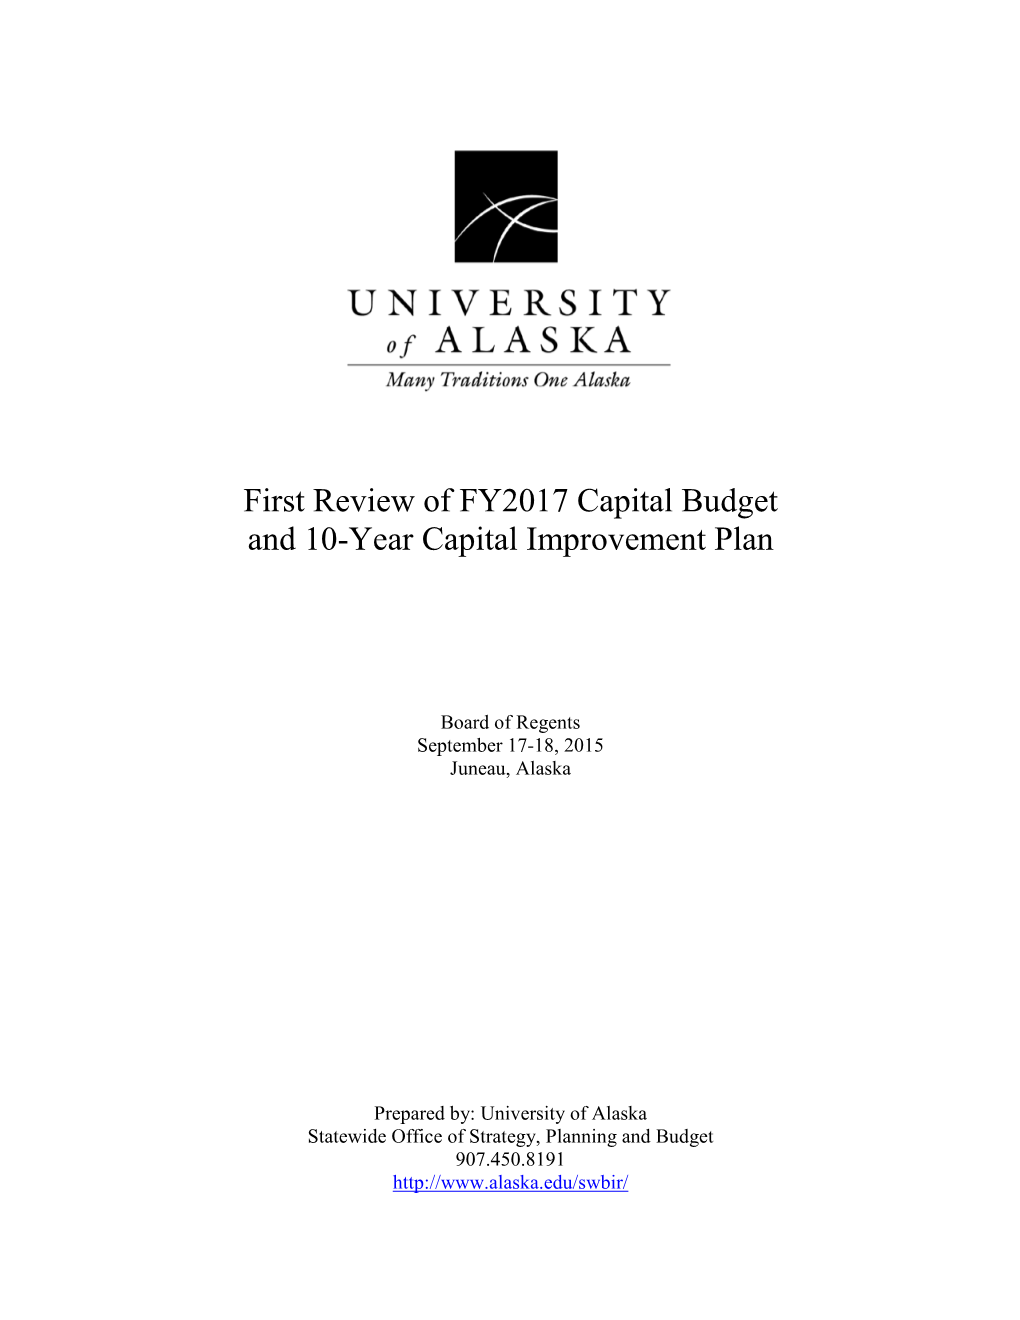 Capital Budget Request